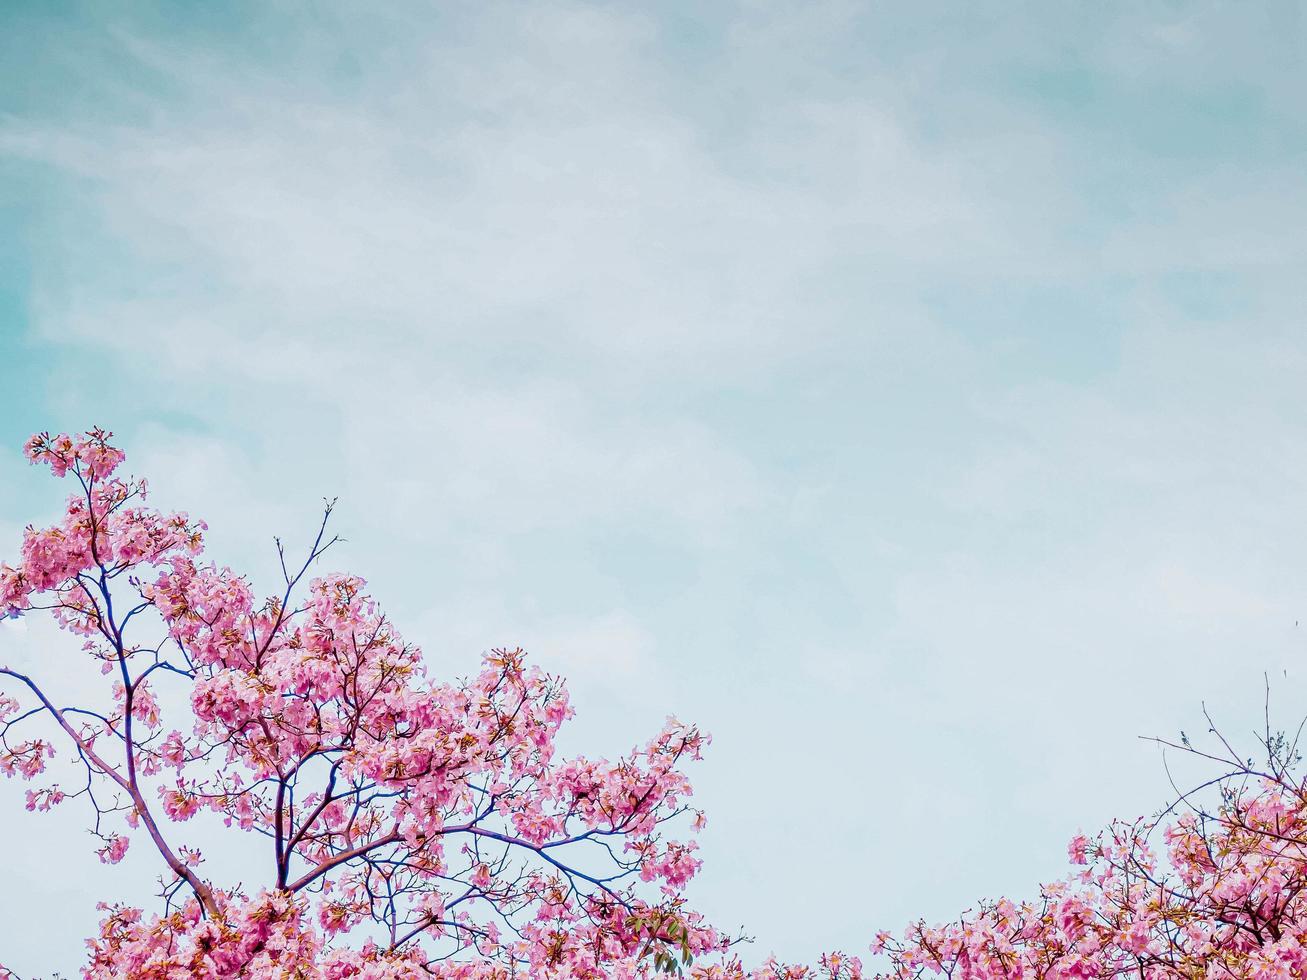 Pink tabebuia flower blossom against blue sky photo